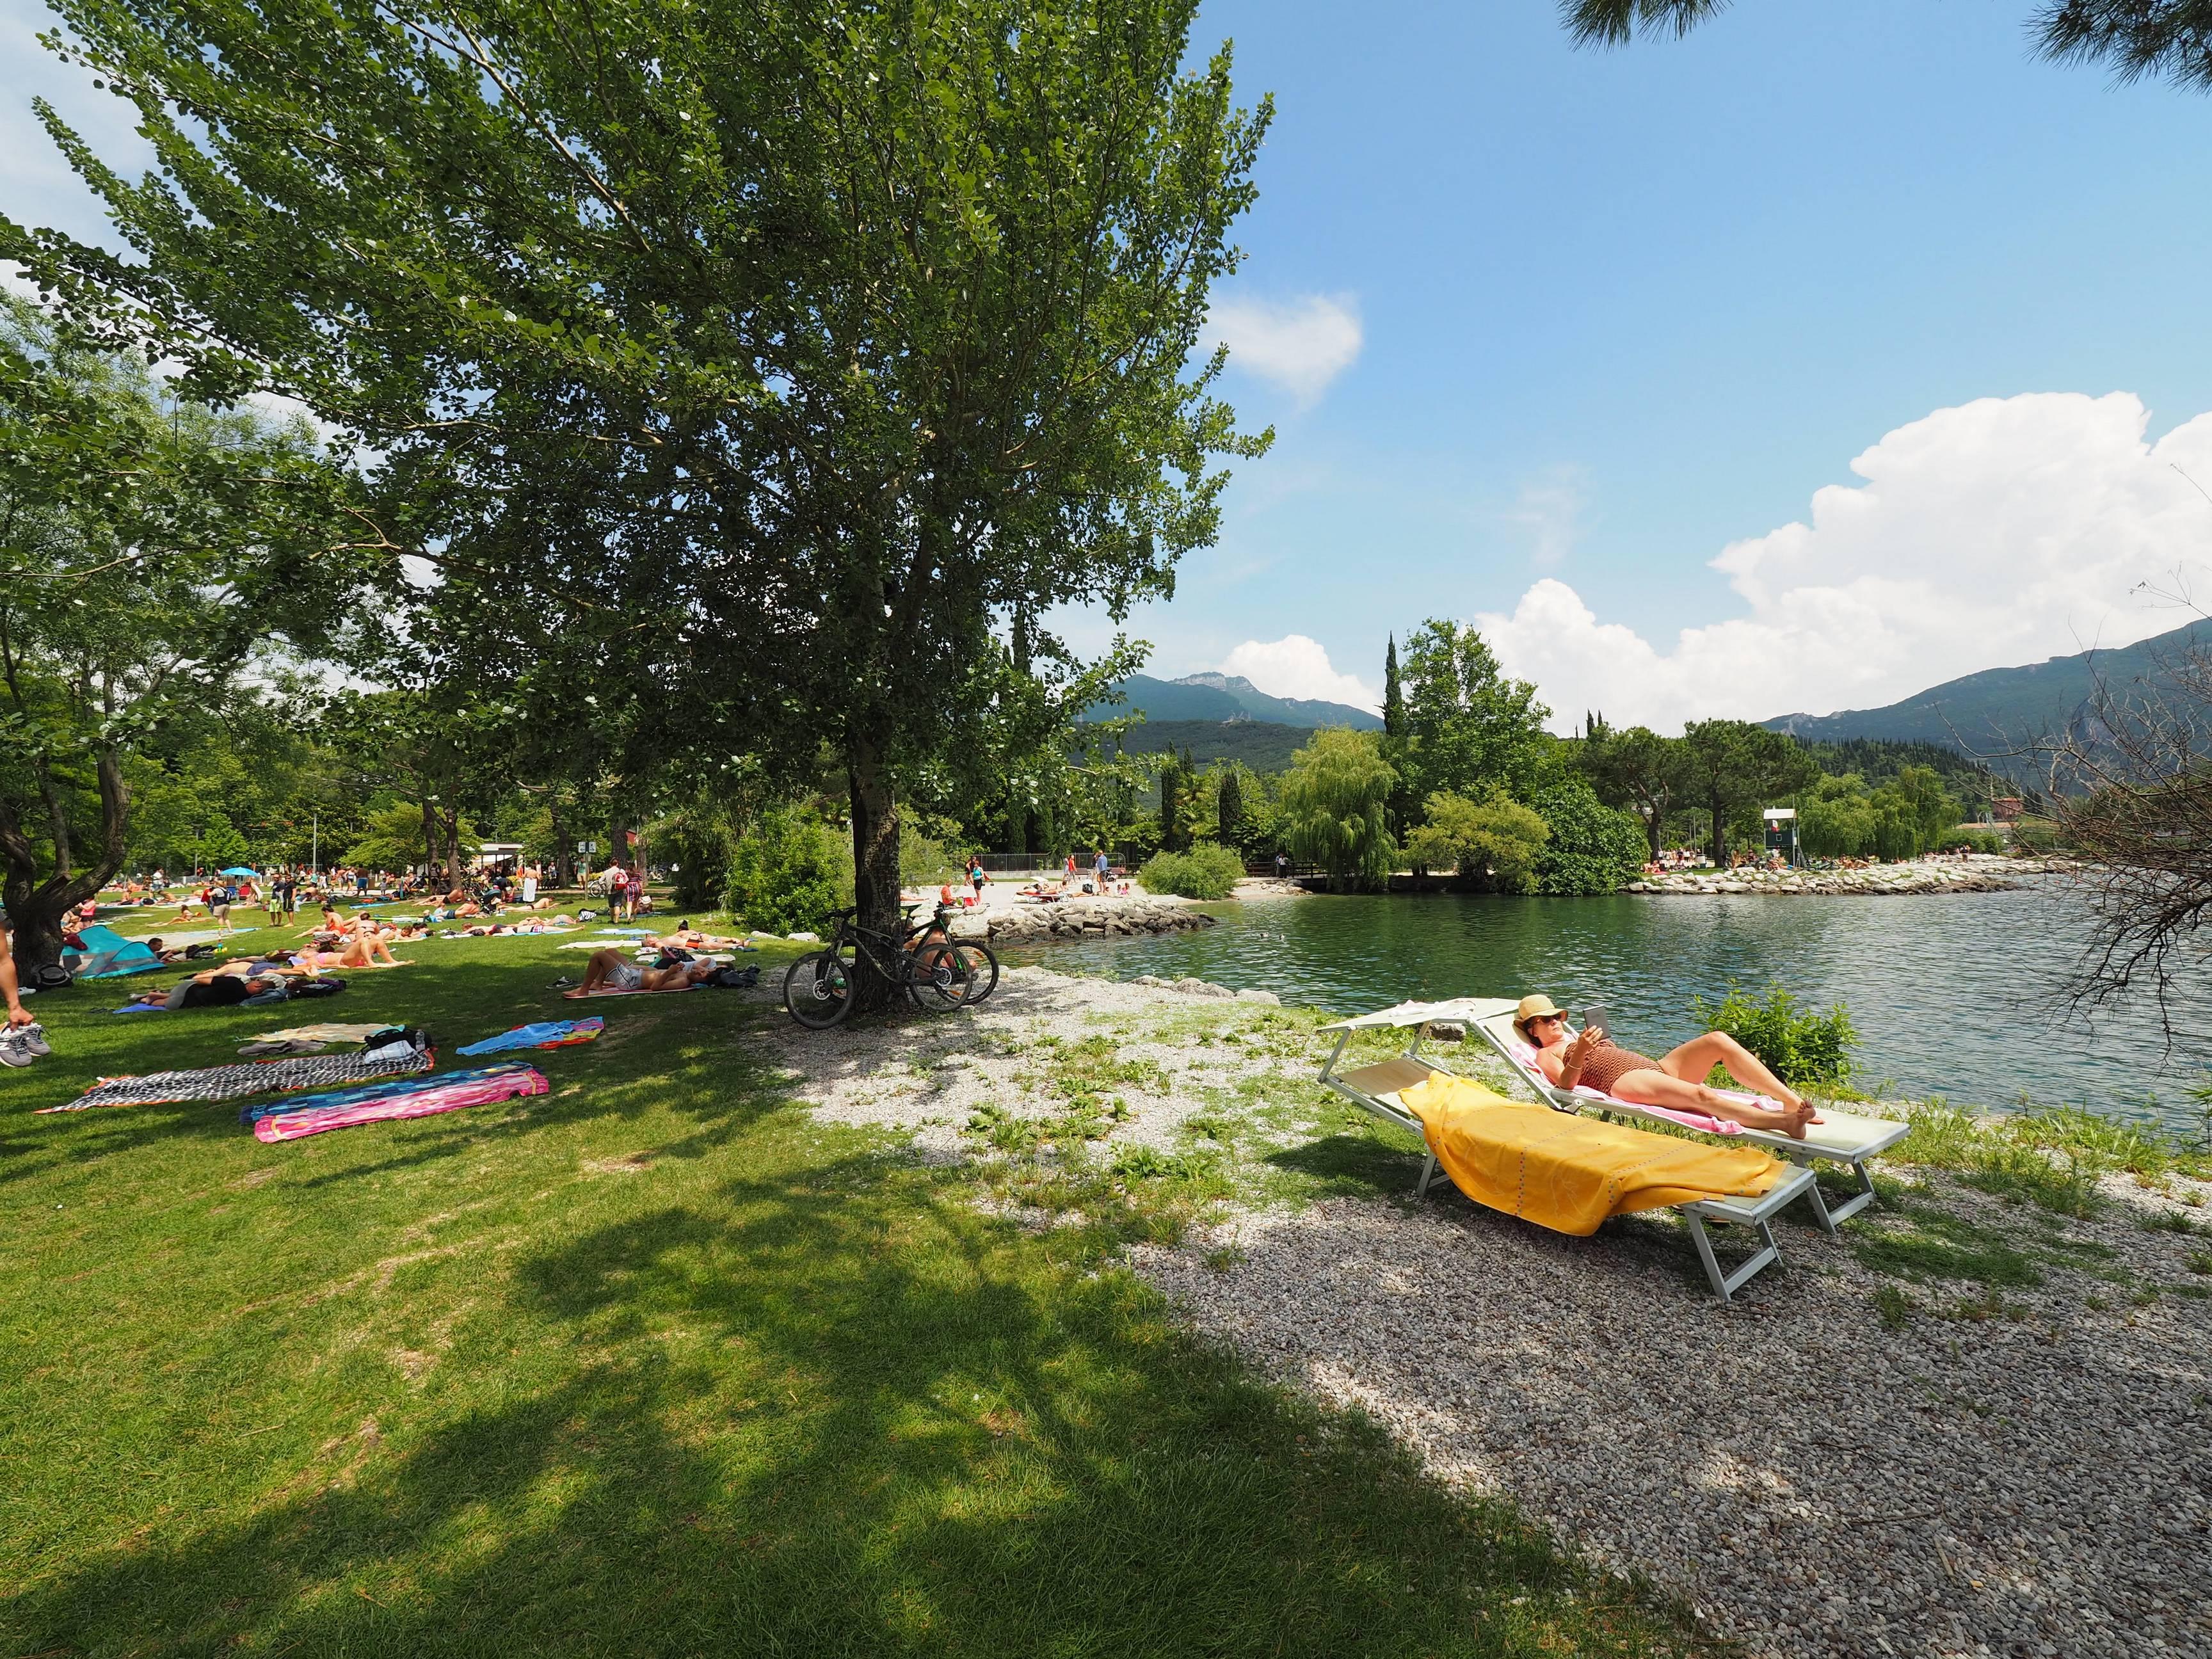 A family holiday in Riva del Garda – image 3